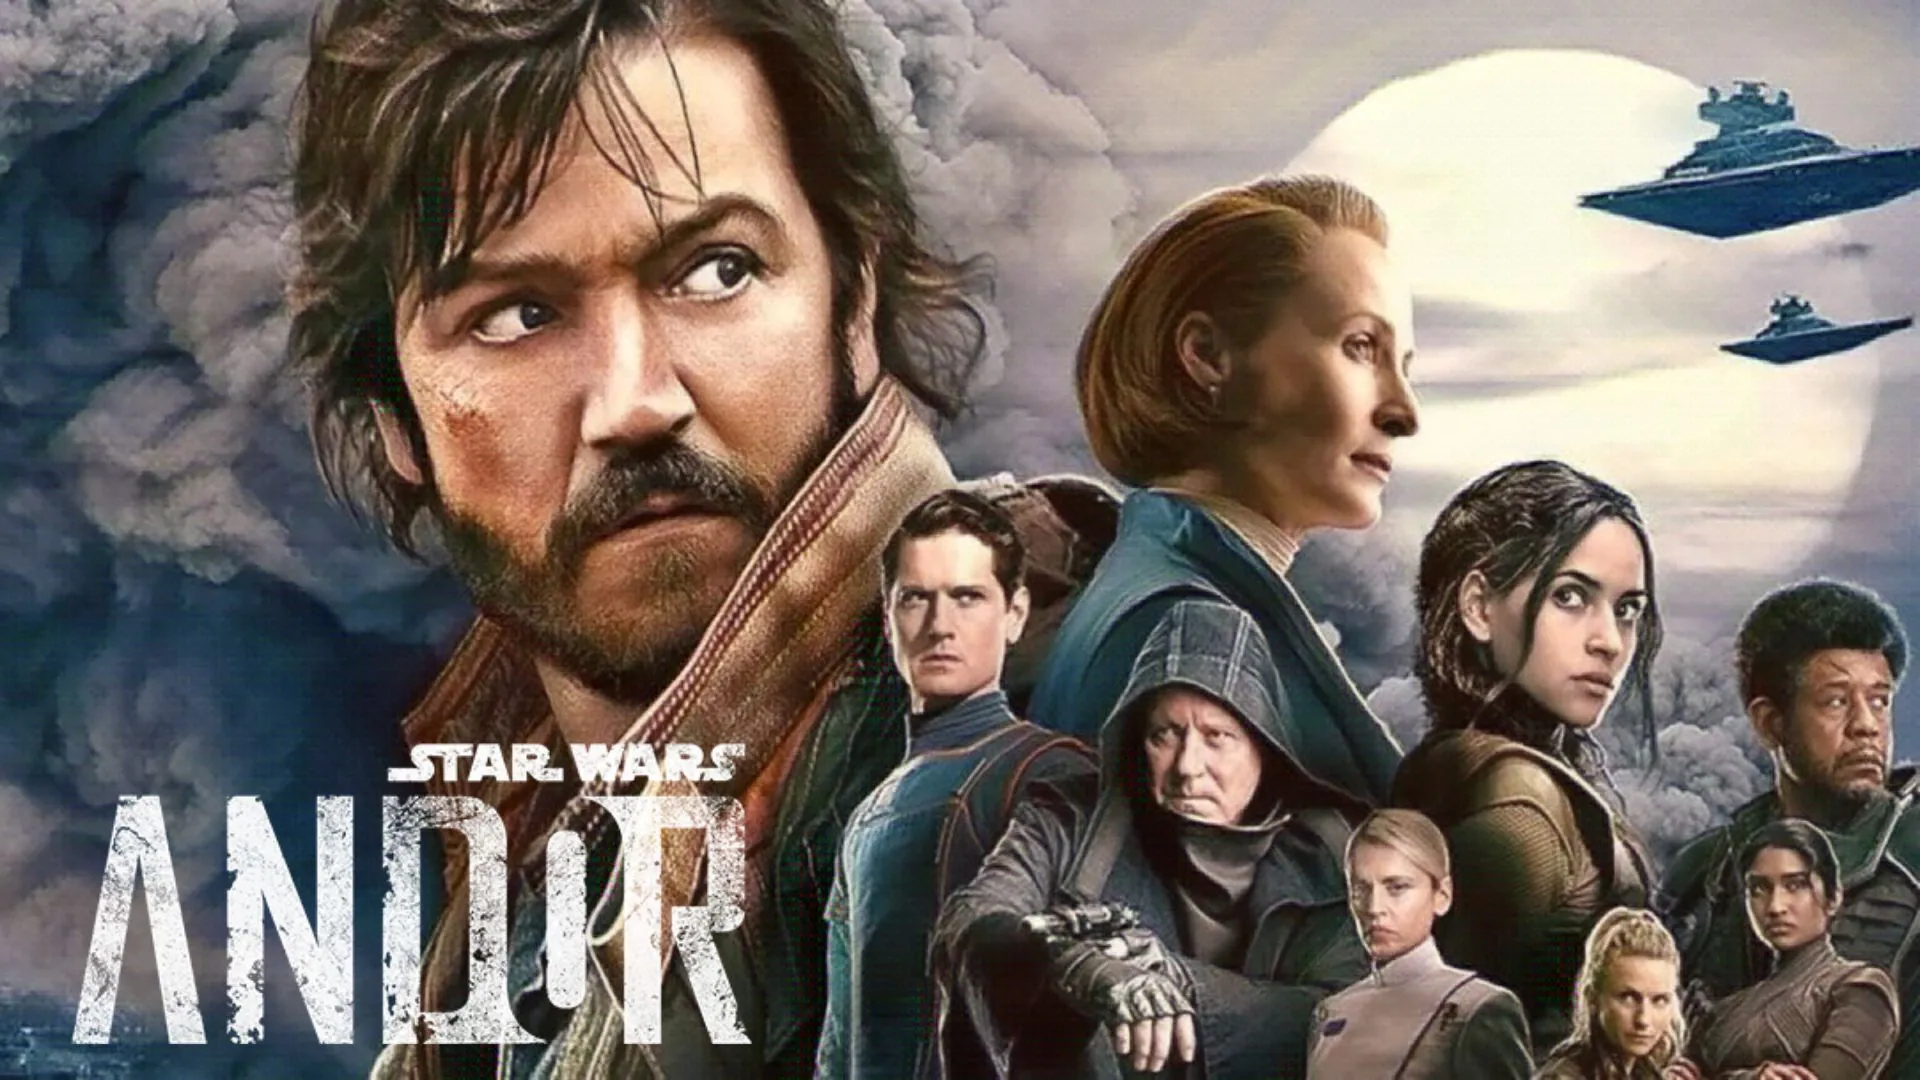 Star Wars: Andor Vol 2 Soundtrack